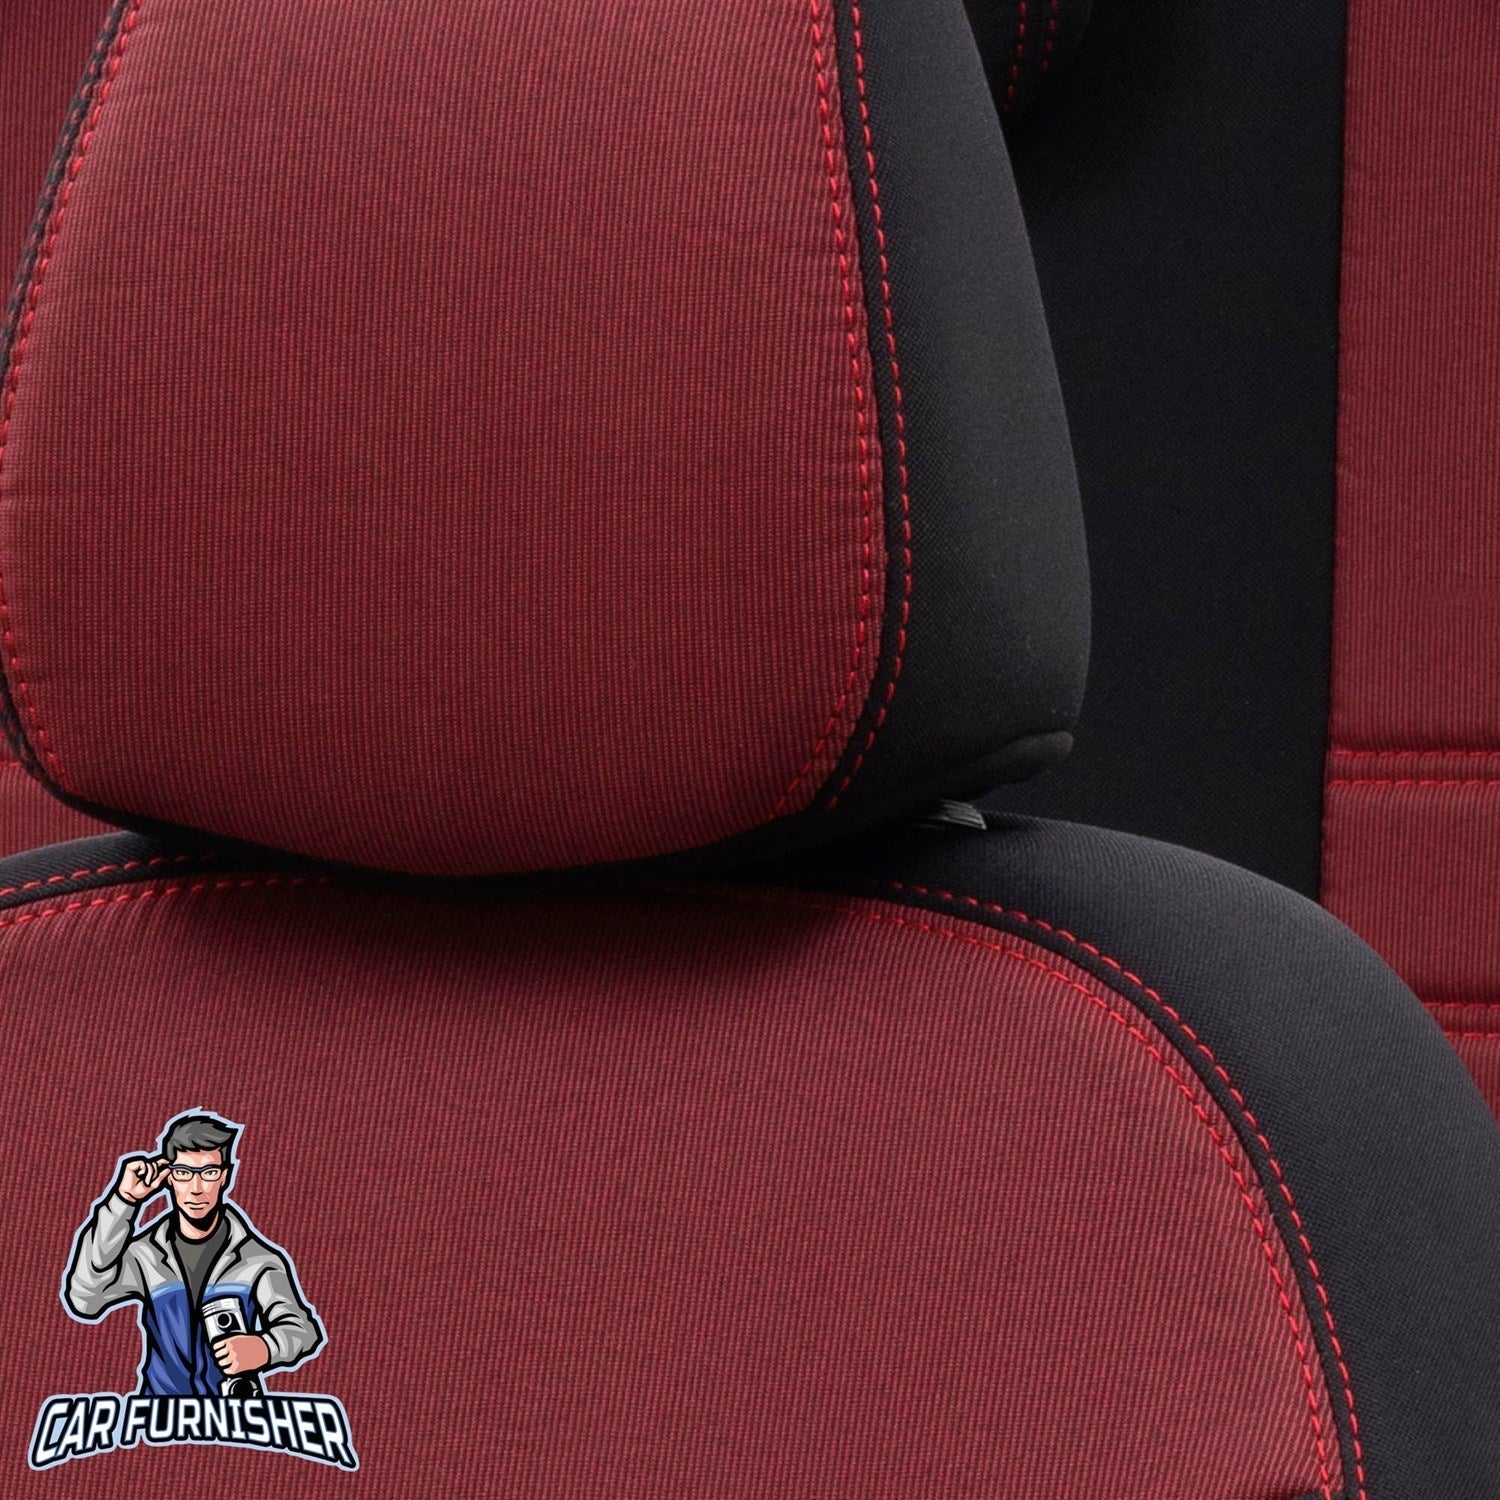 Hyundai Ioniq Seat Covers Original Jacquard Design Red Jacquard Fabric